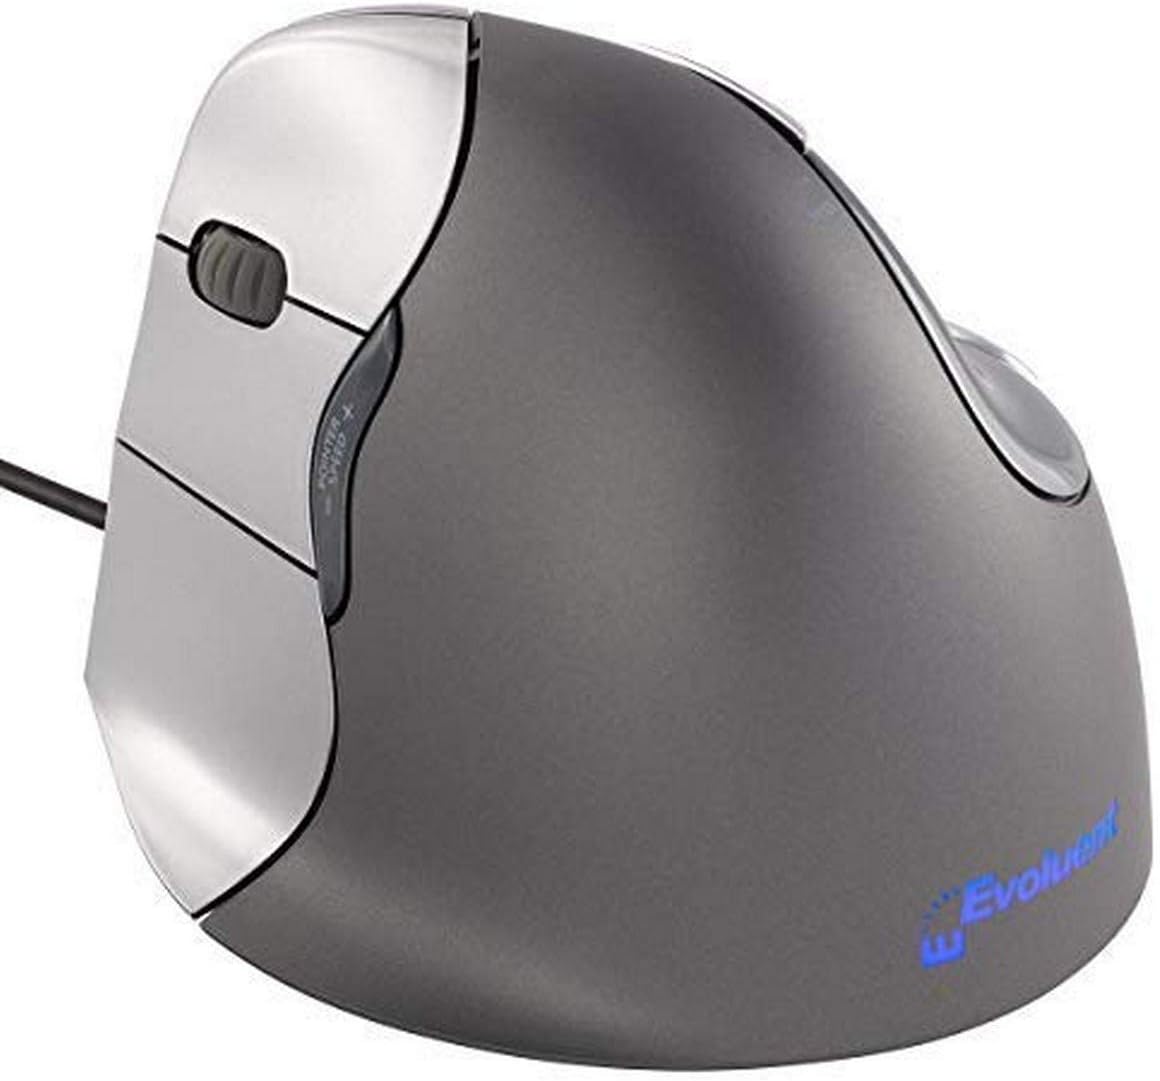 Evoluent VM4L VerticalMouse 4 Left Hand Ergonomic Mouse review